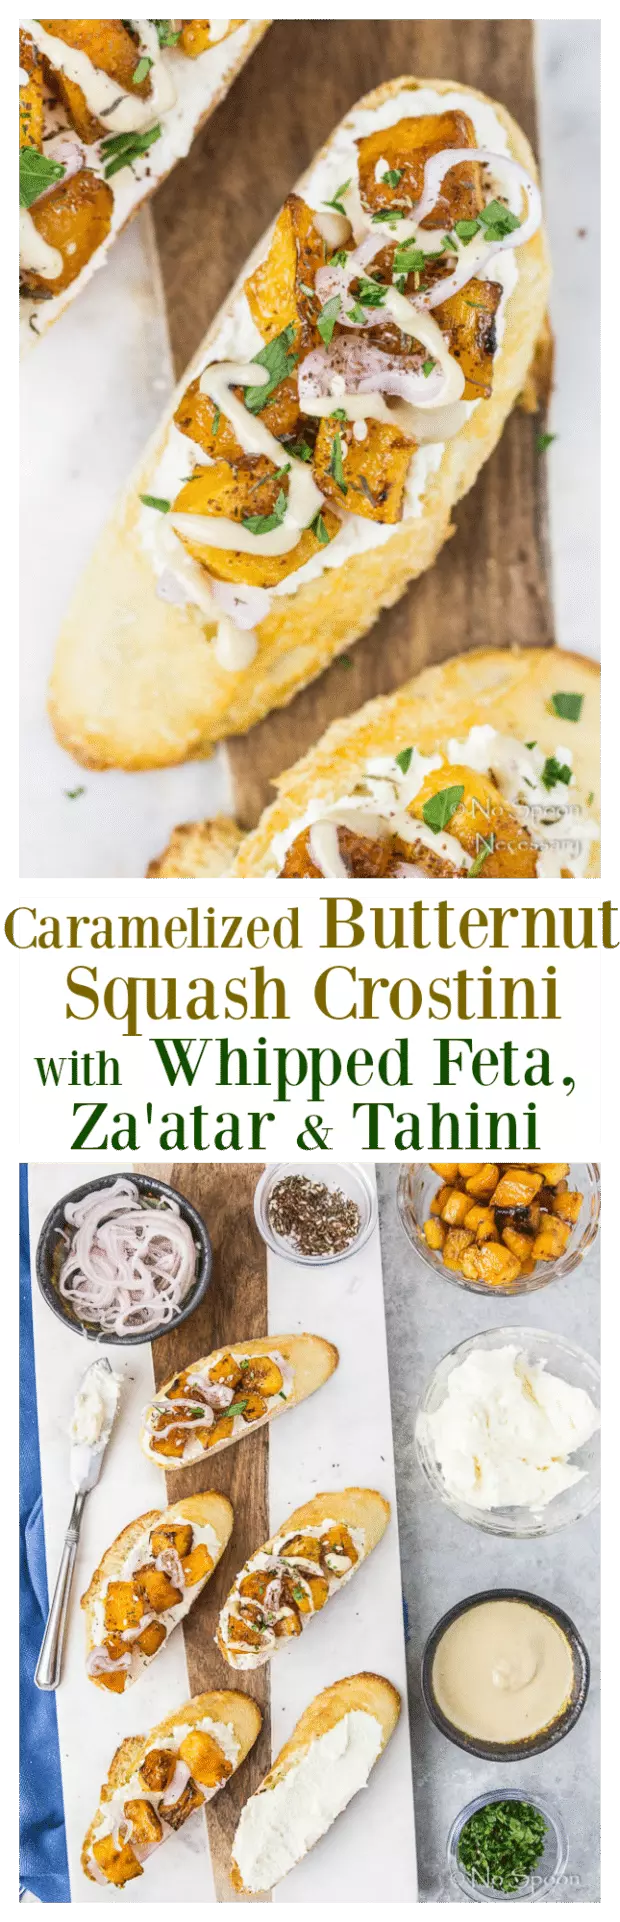 Caramelized Butternut Squash Crostini with Whipped Feta, Za'atar & Tahini